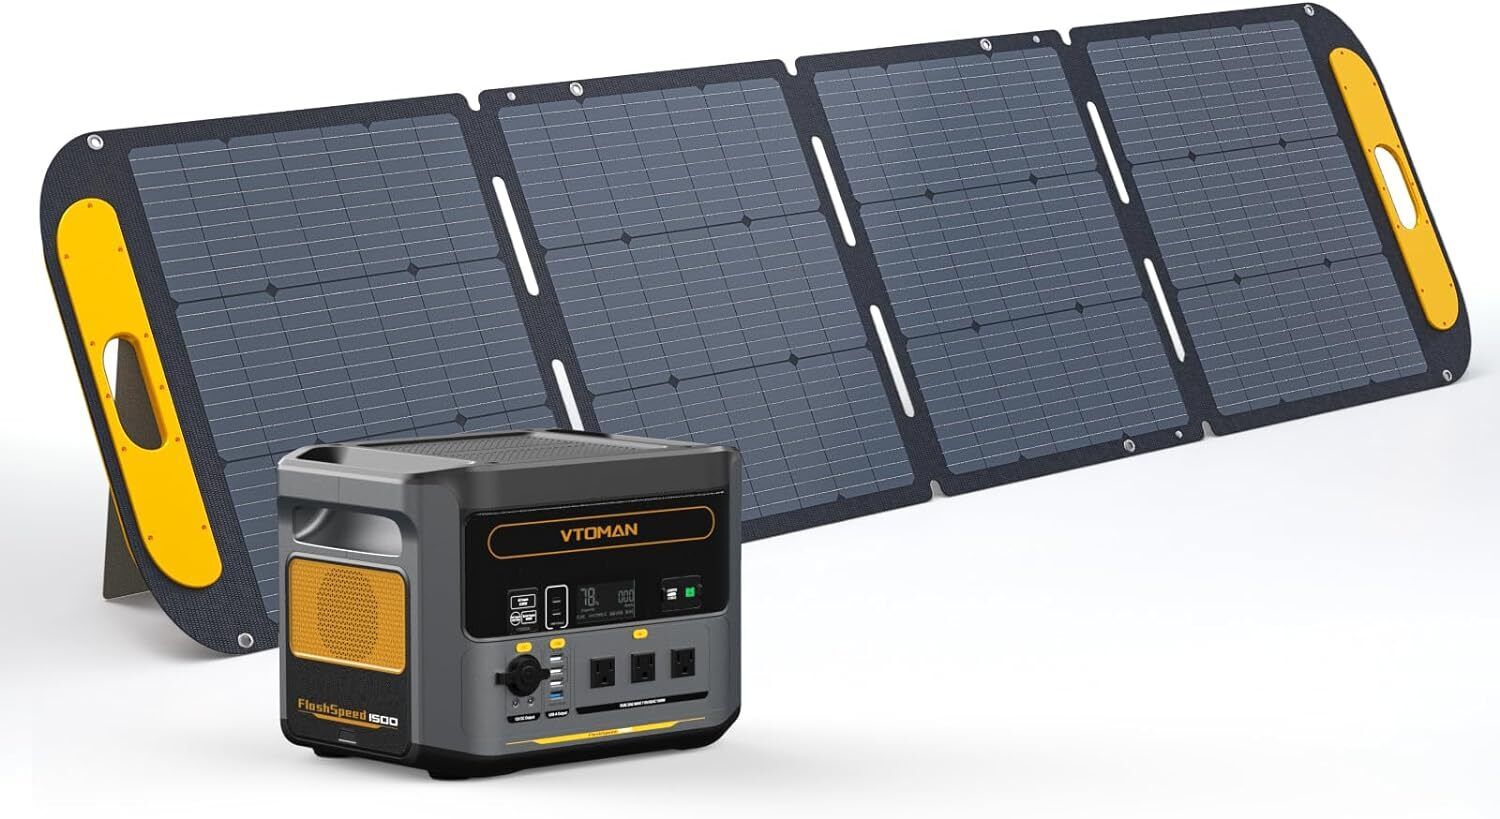 VTOMAN FlashSpeed 1500 Portable Power Station 1500W Generator+220W Solar Pannel